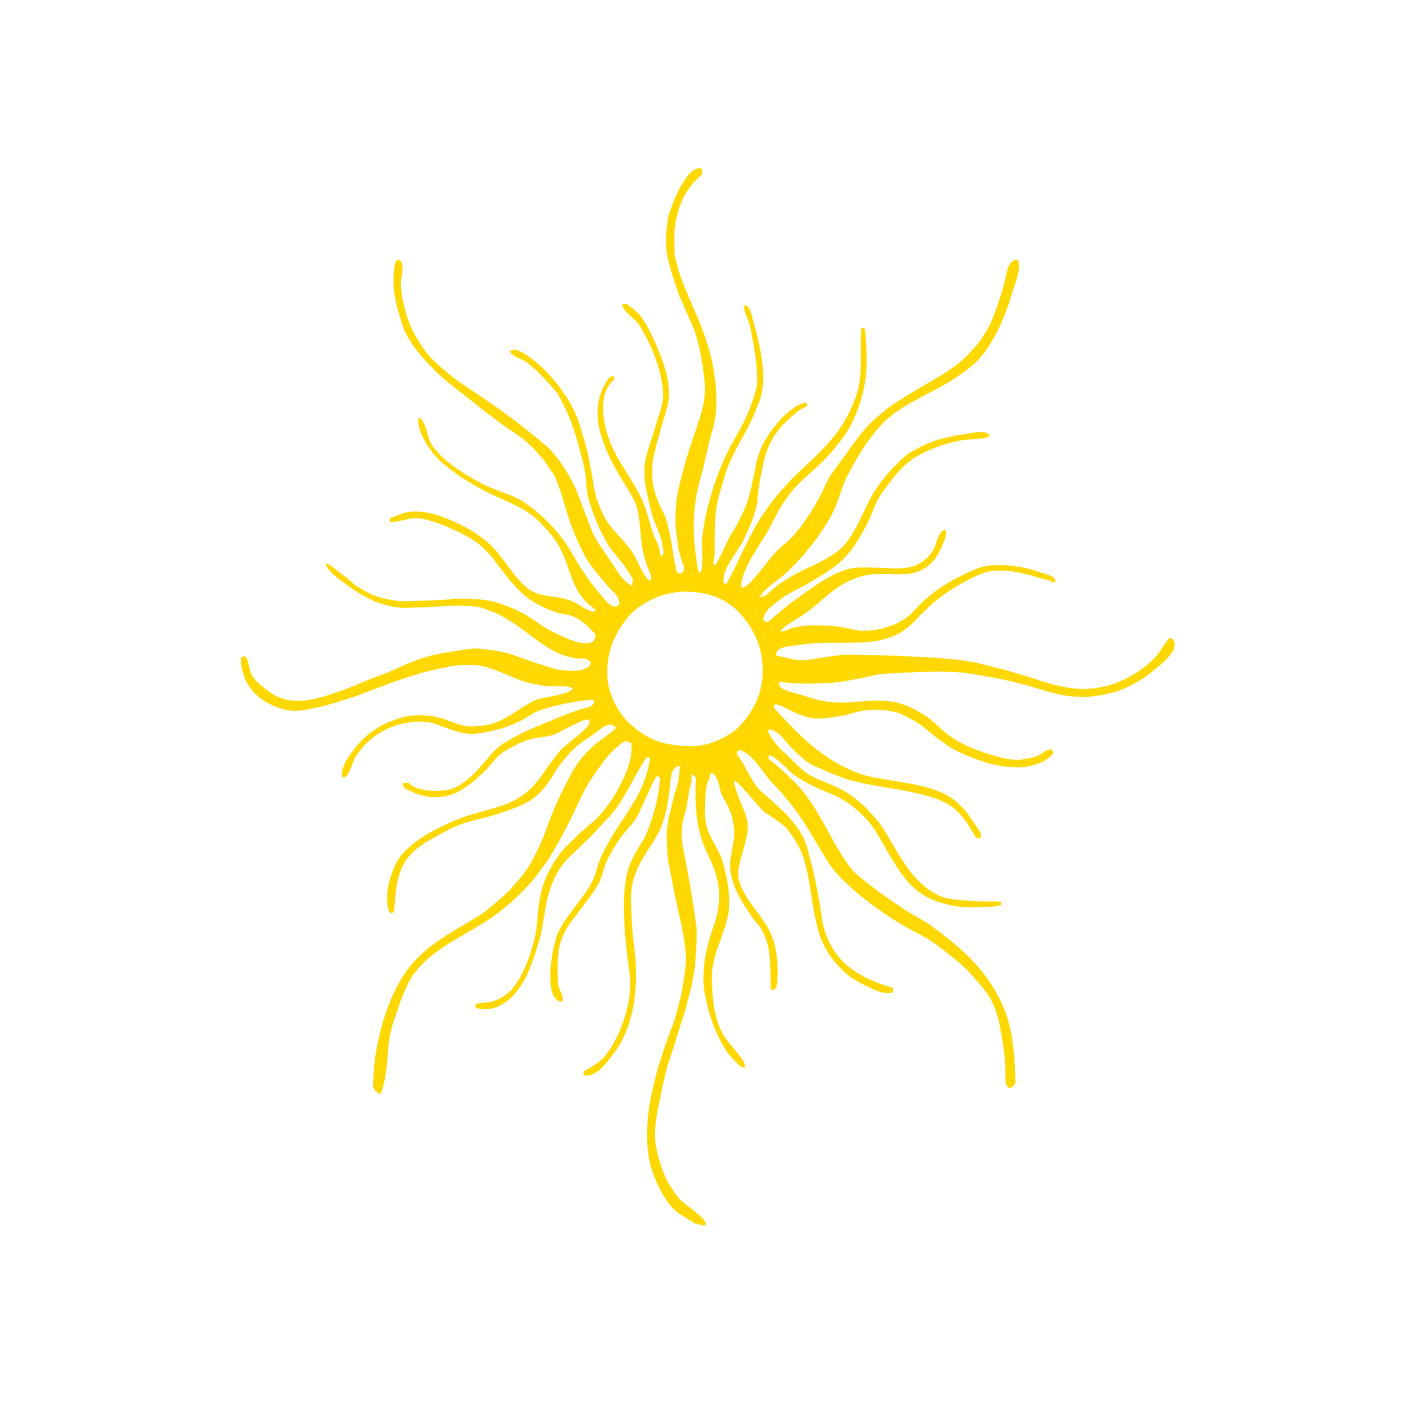 Naoussa houses